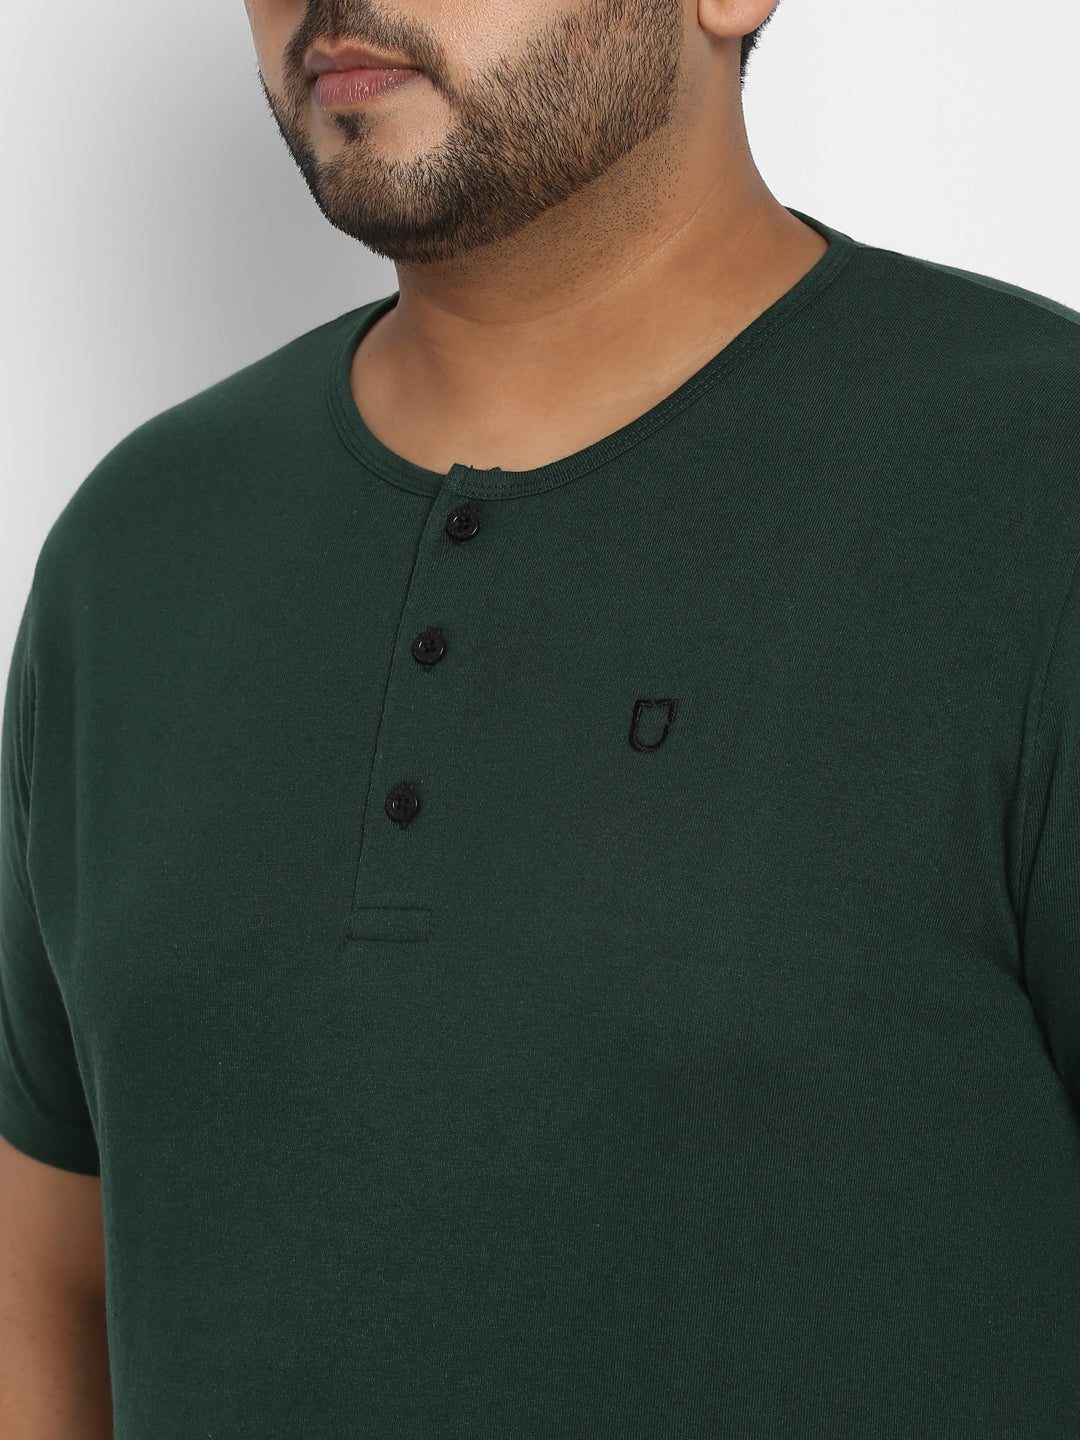 Men's Bottle Green Solid Regular Fit Henley Neck Half Sleeve Cotton T-Shirt